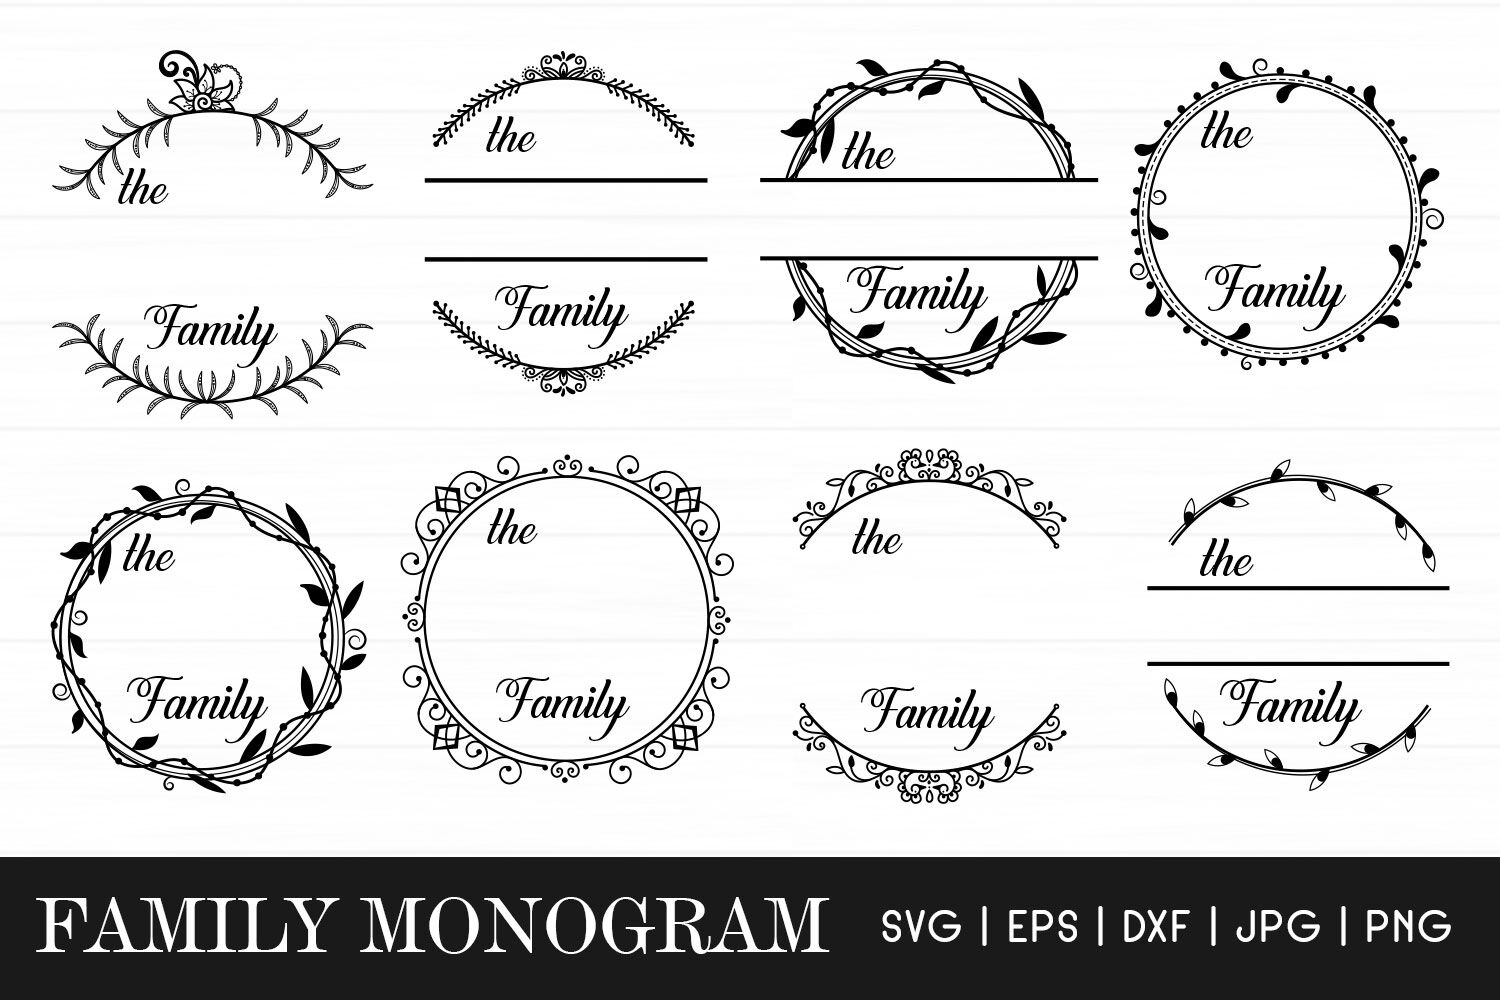 Family monogram SVG - Family Name Sign Monogram Frames By Dasagani